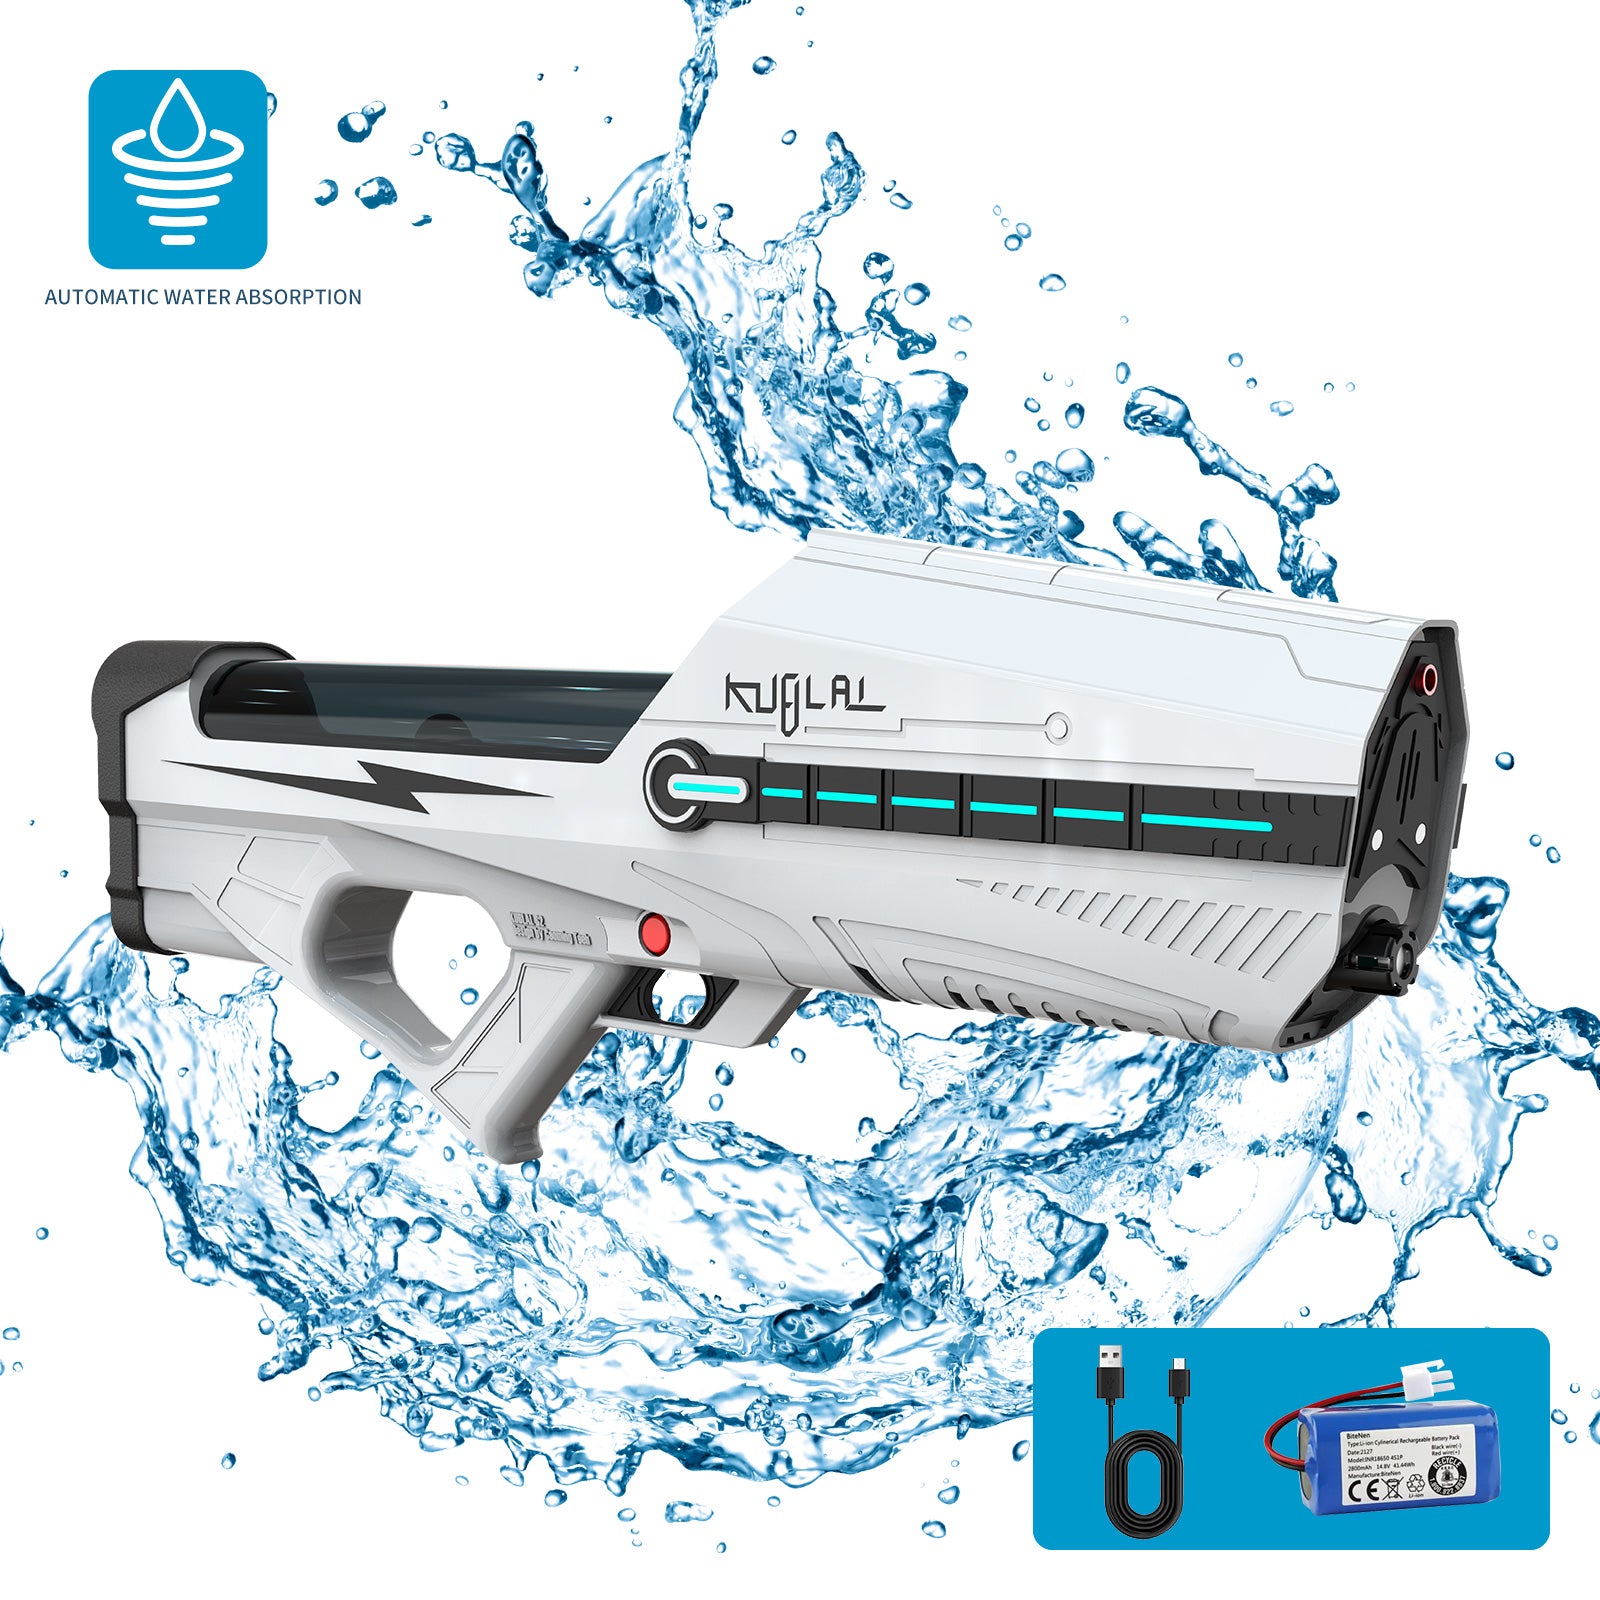 S2 electric water gun